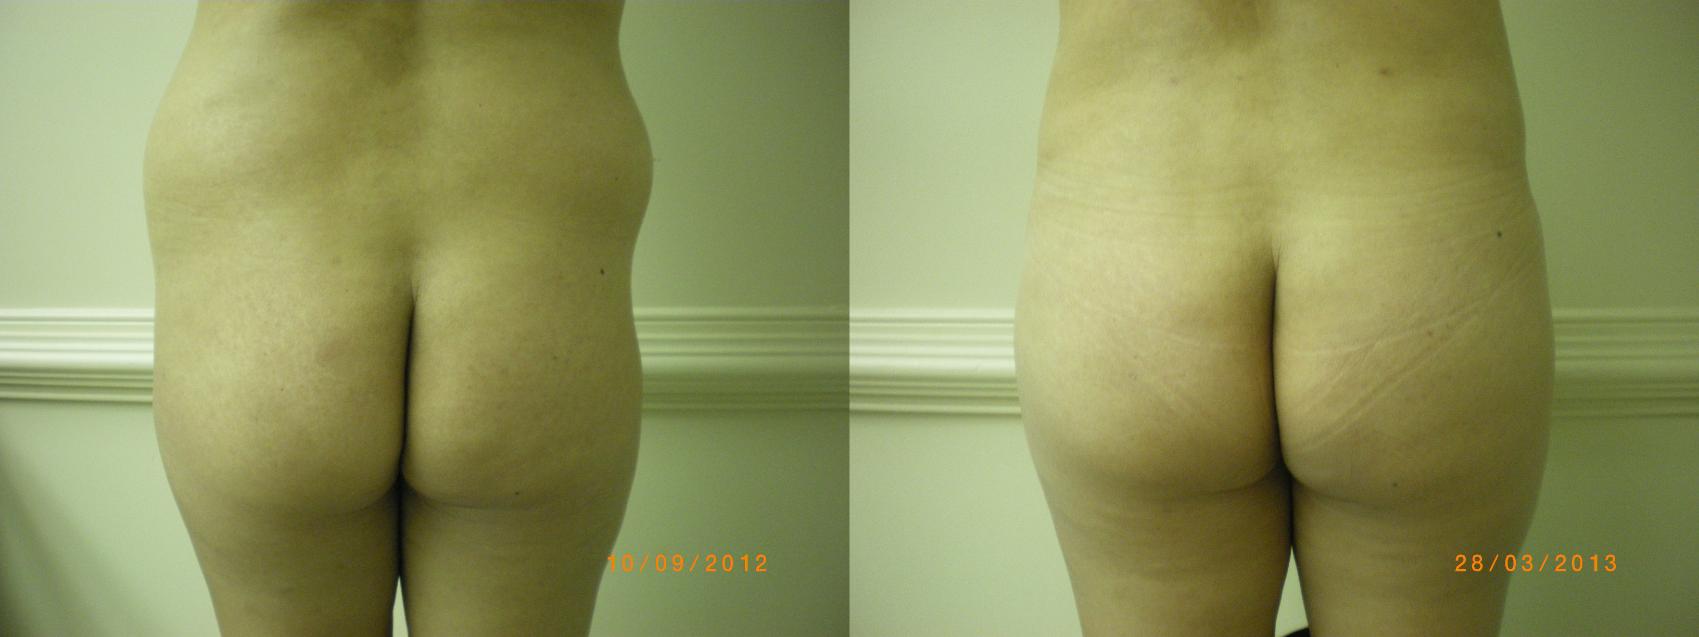 Brazilian Butt Lift Before & After Photo | Marietta, GA | Plastic Surgery Center of the South